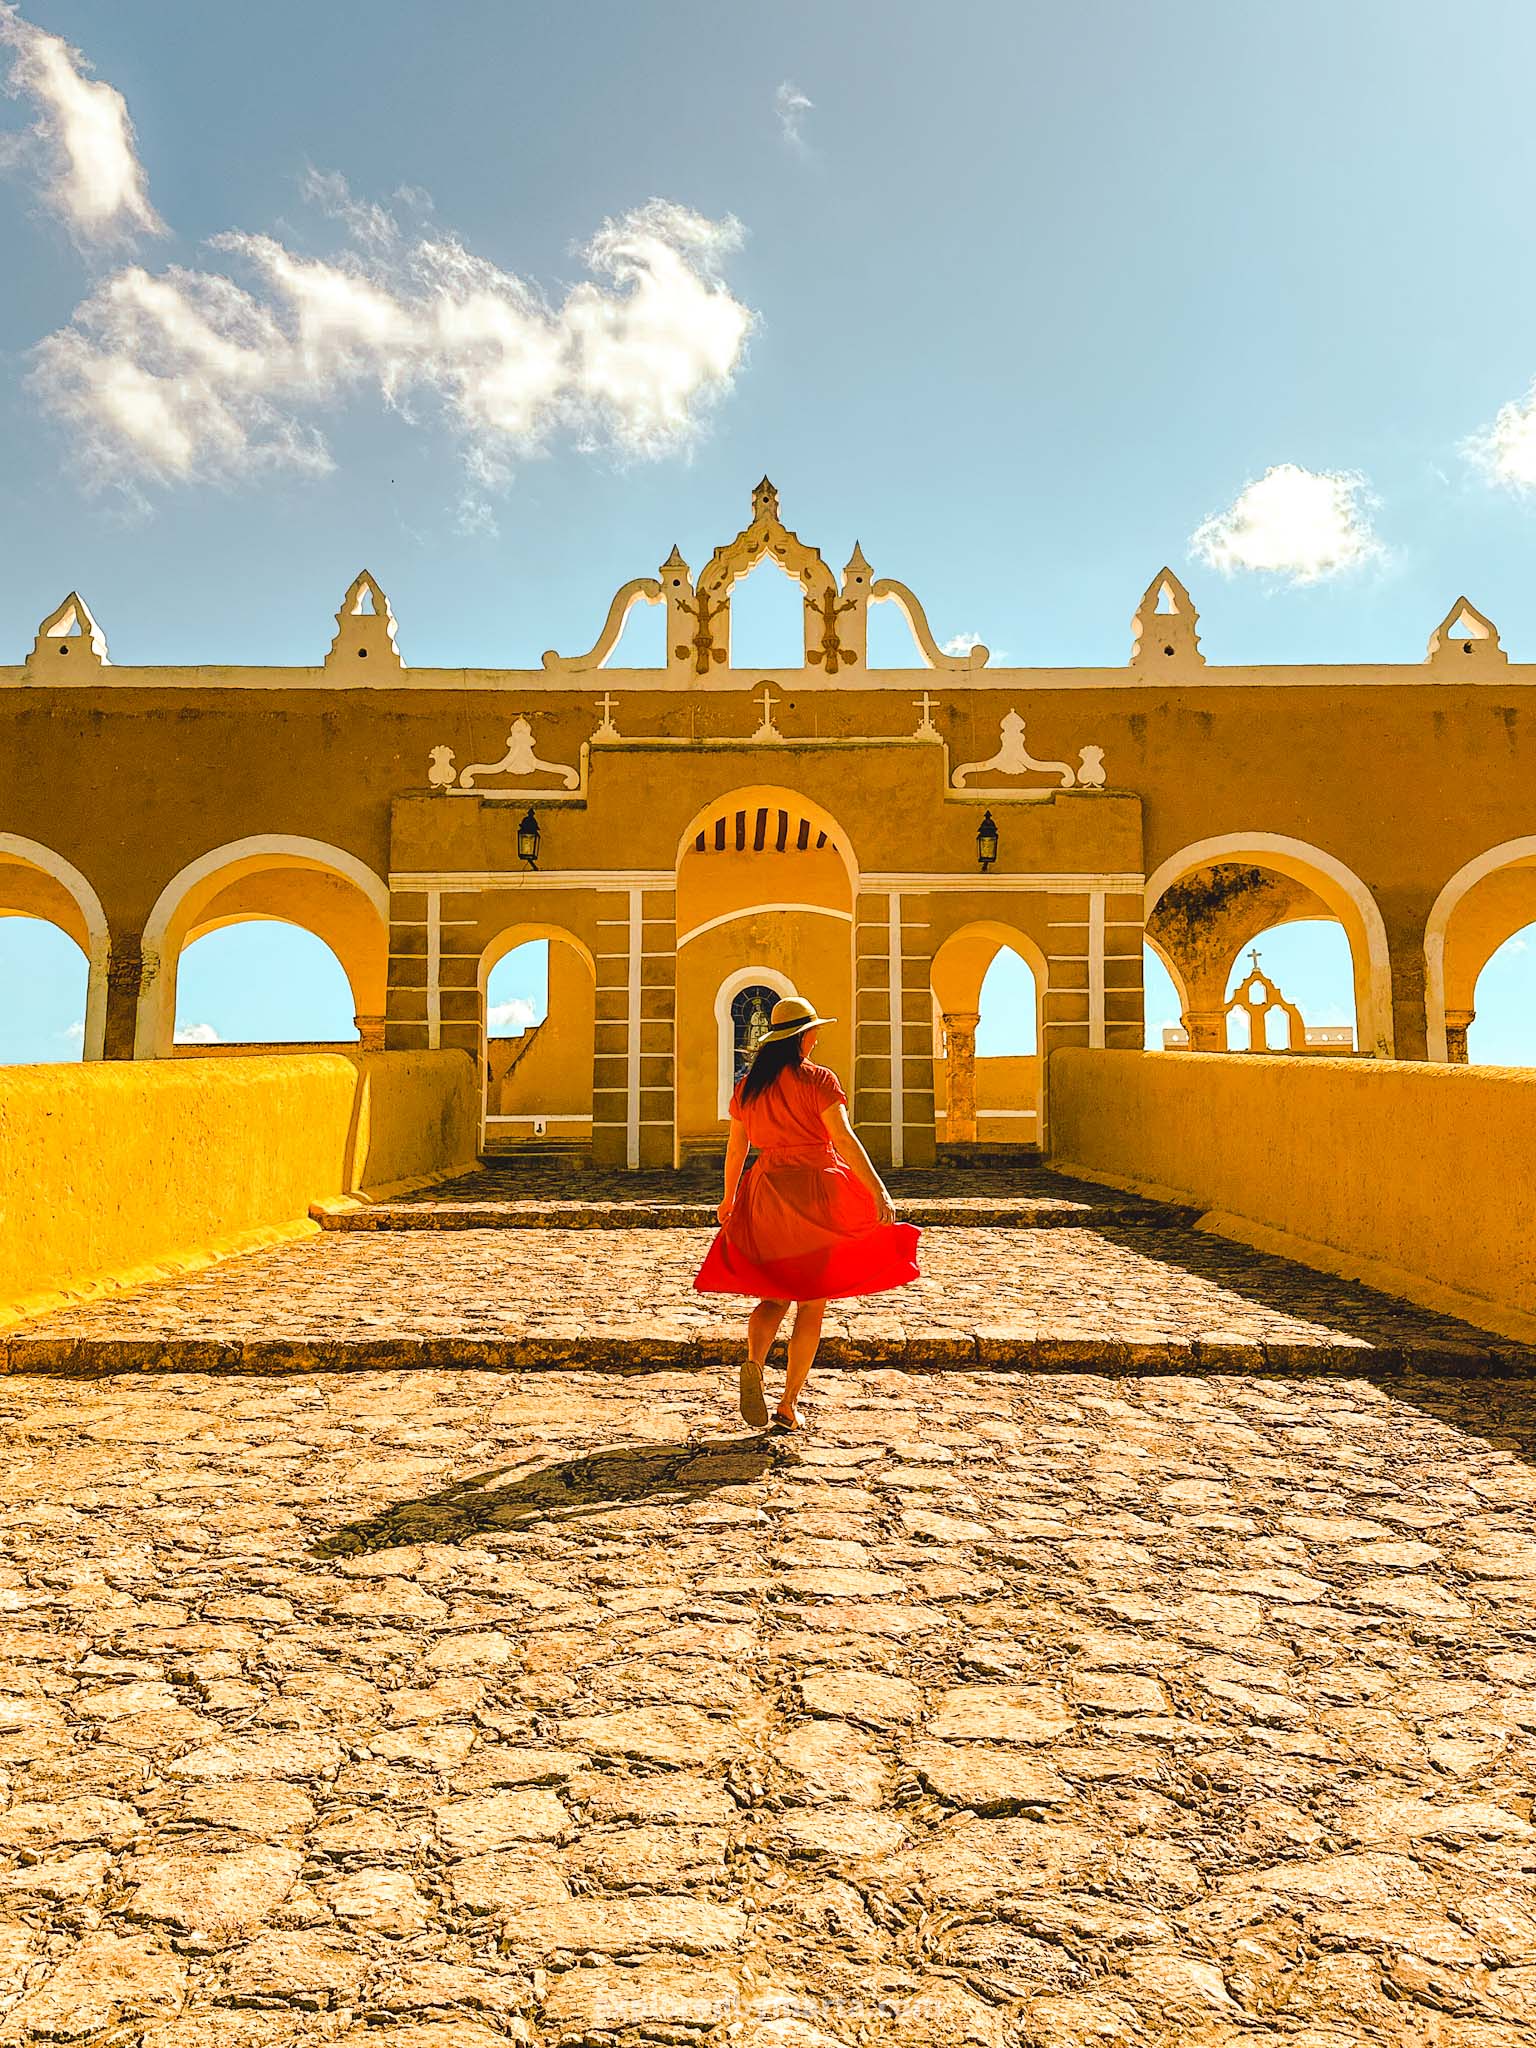 Izamal, Mexico-the yellow Convento de San Antonio convent in Izamal is the main attraction of the city